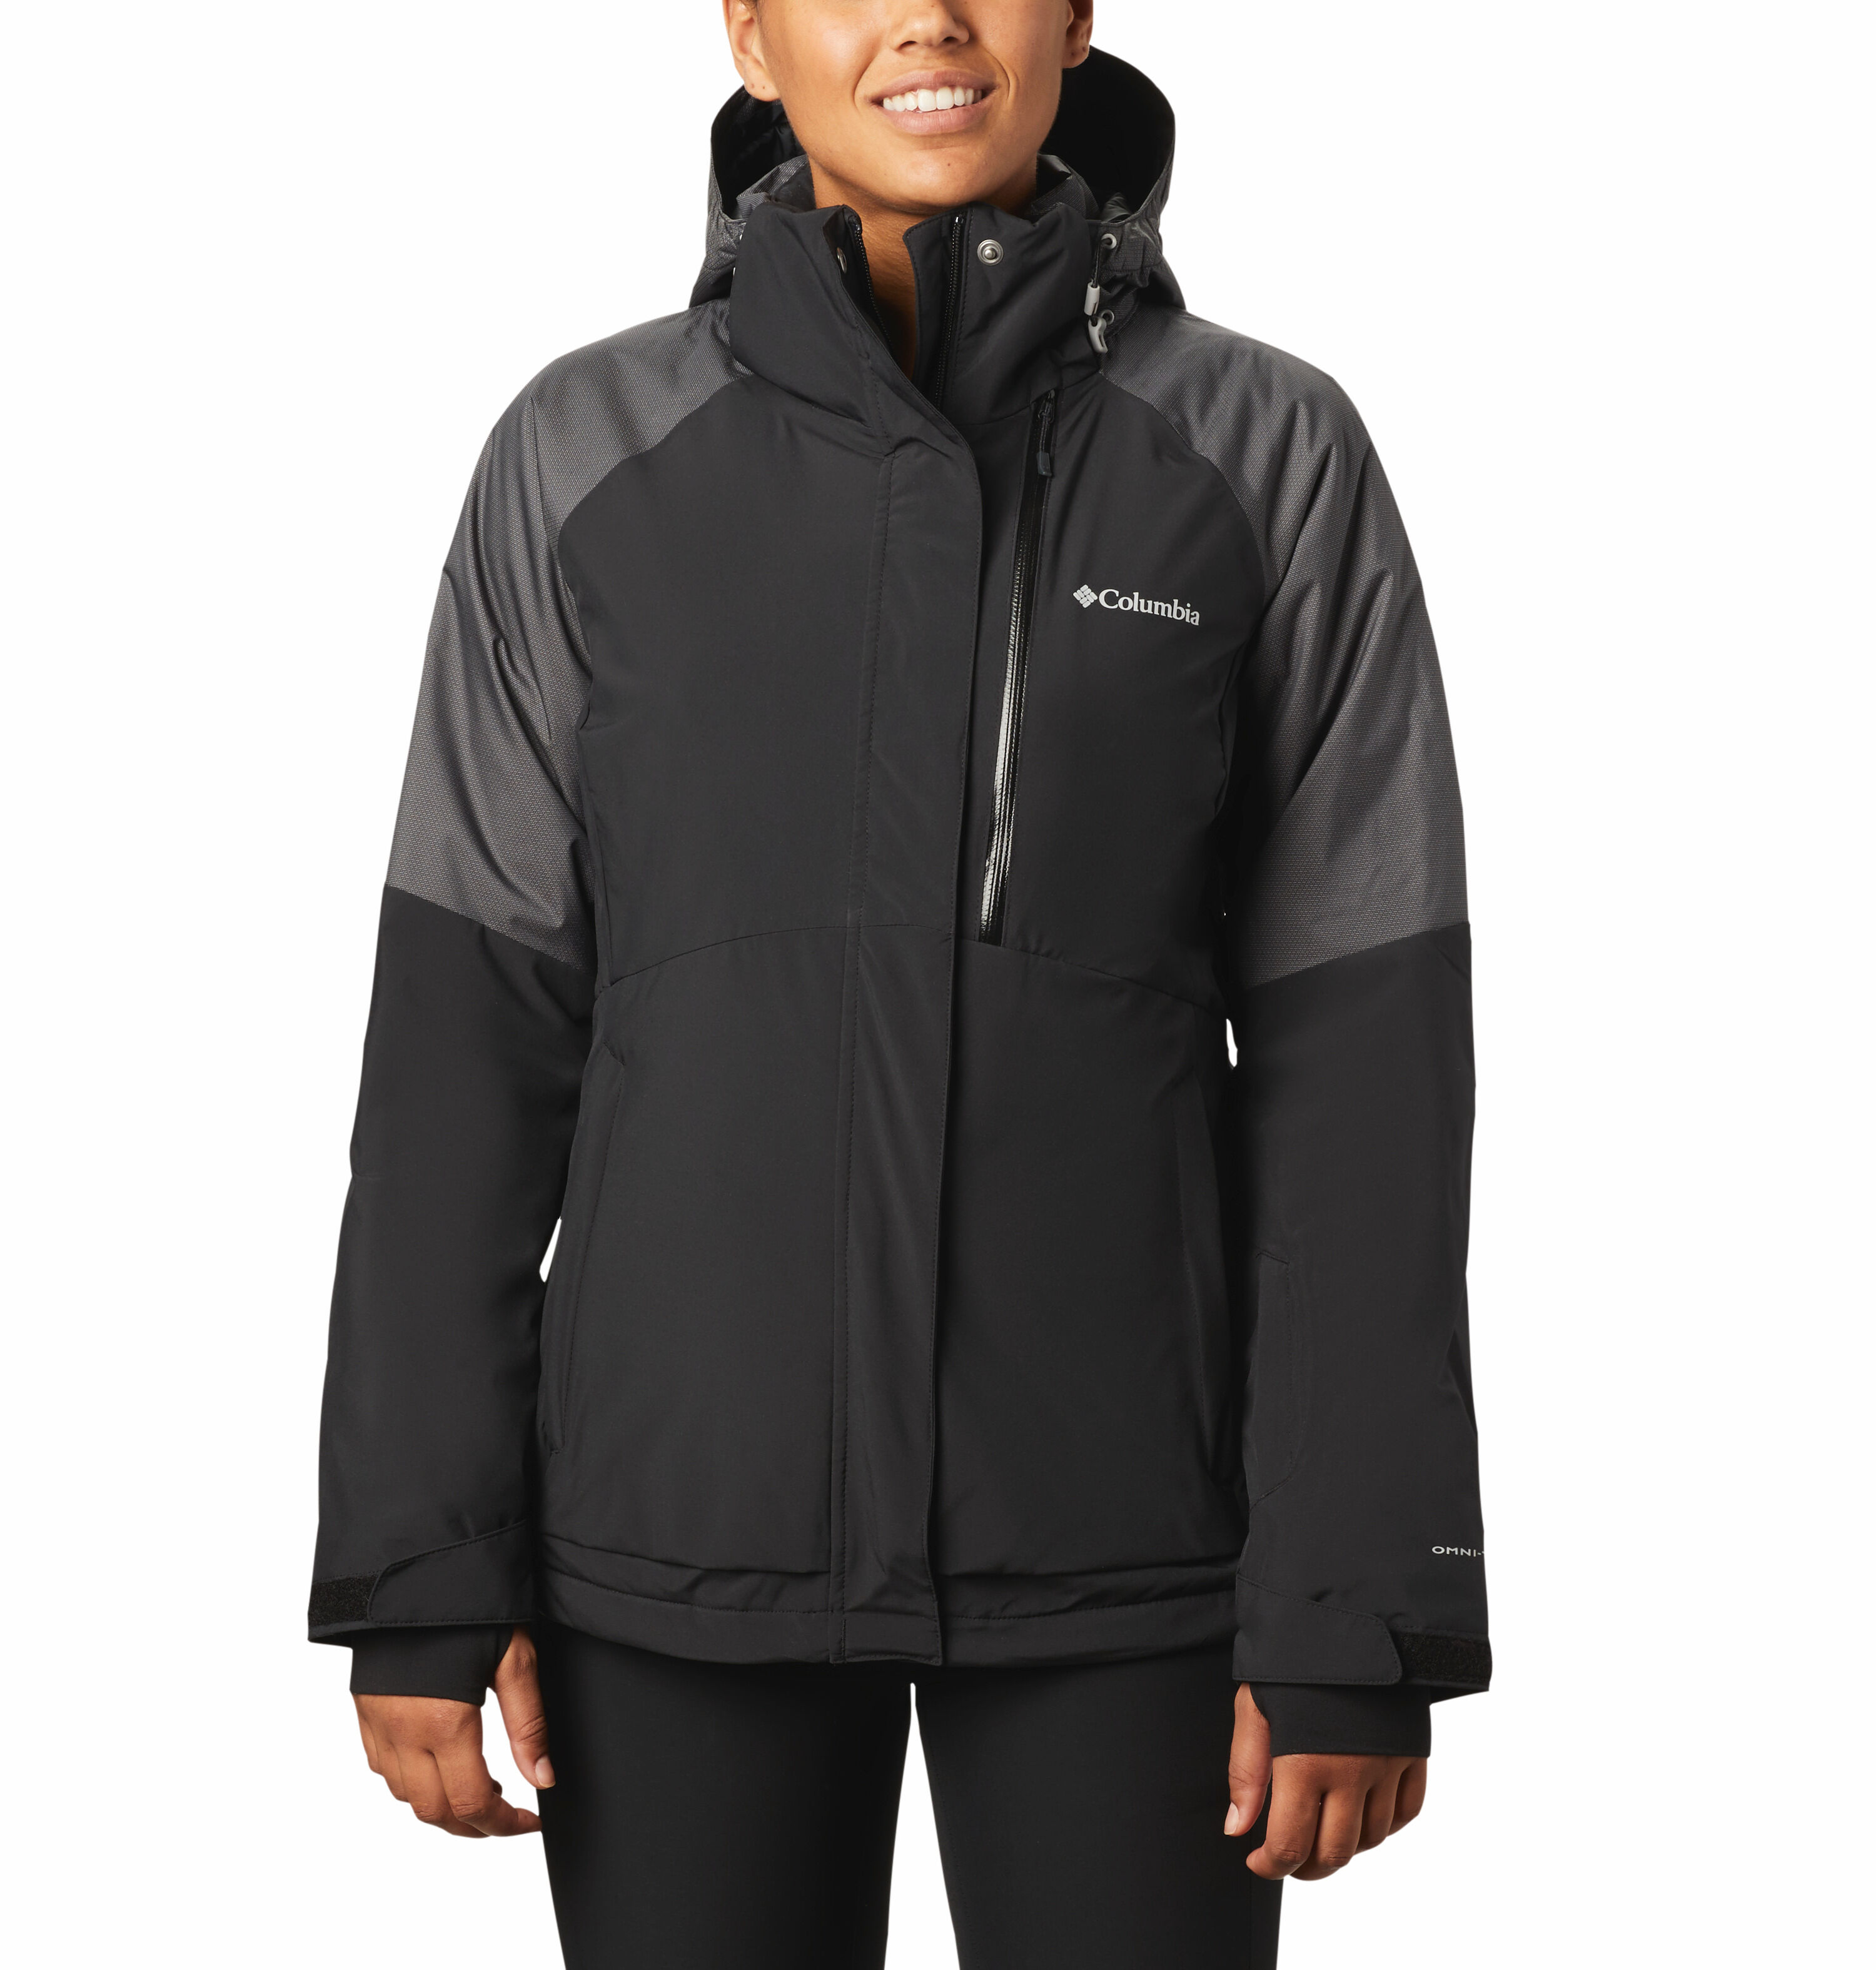 Columbia Wildside Jacket - Ski jacket - Women's